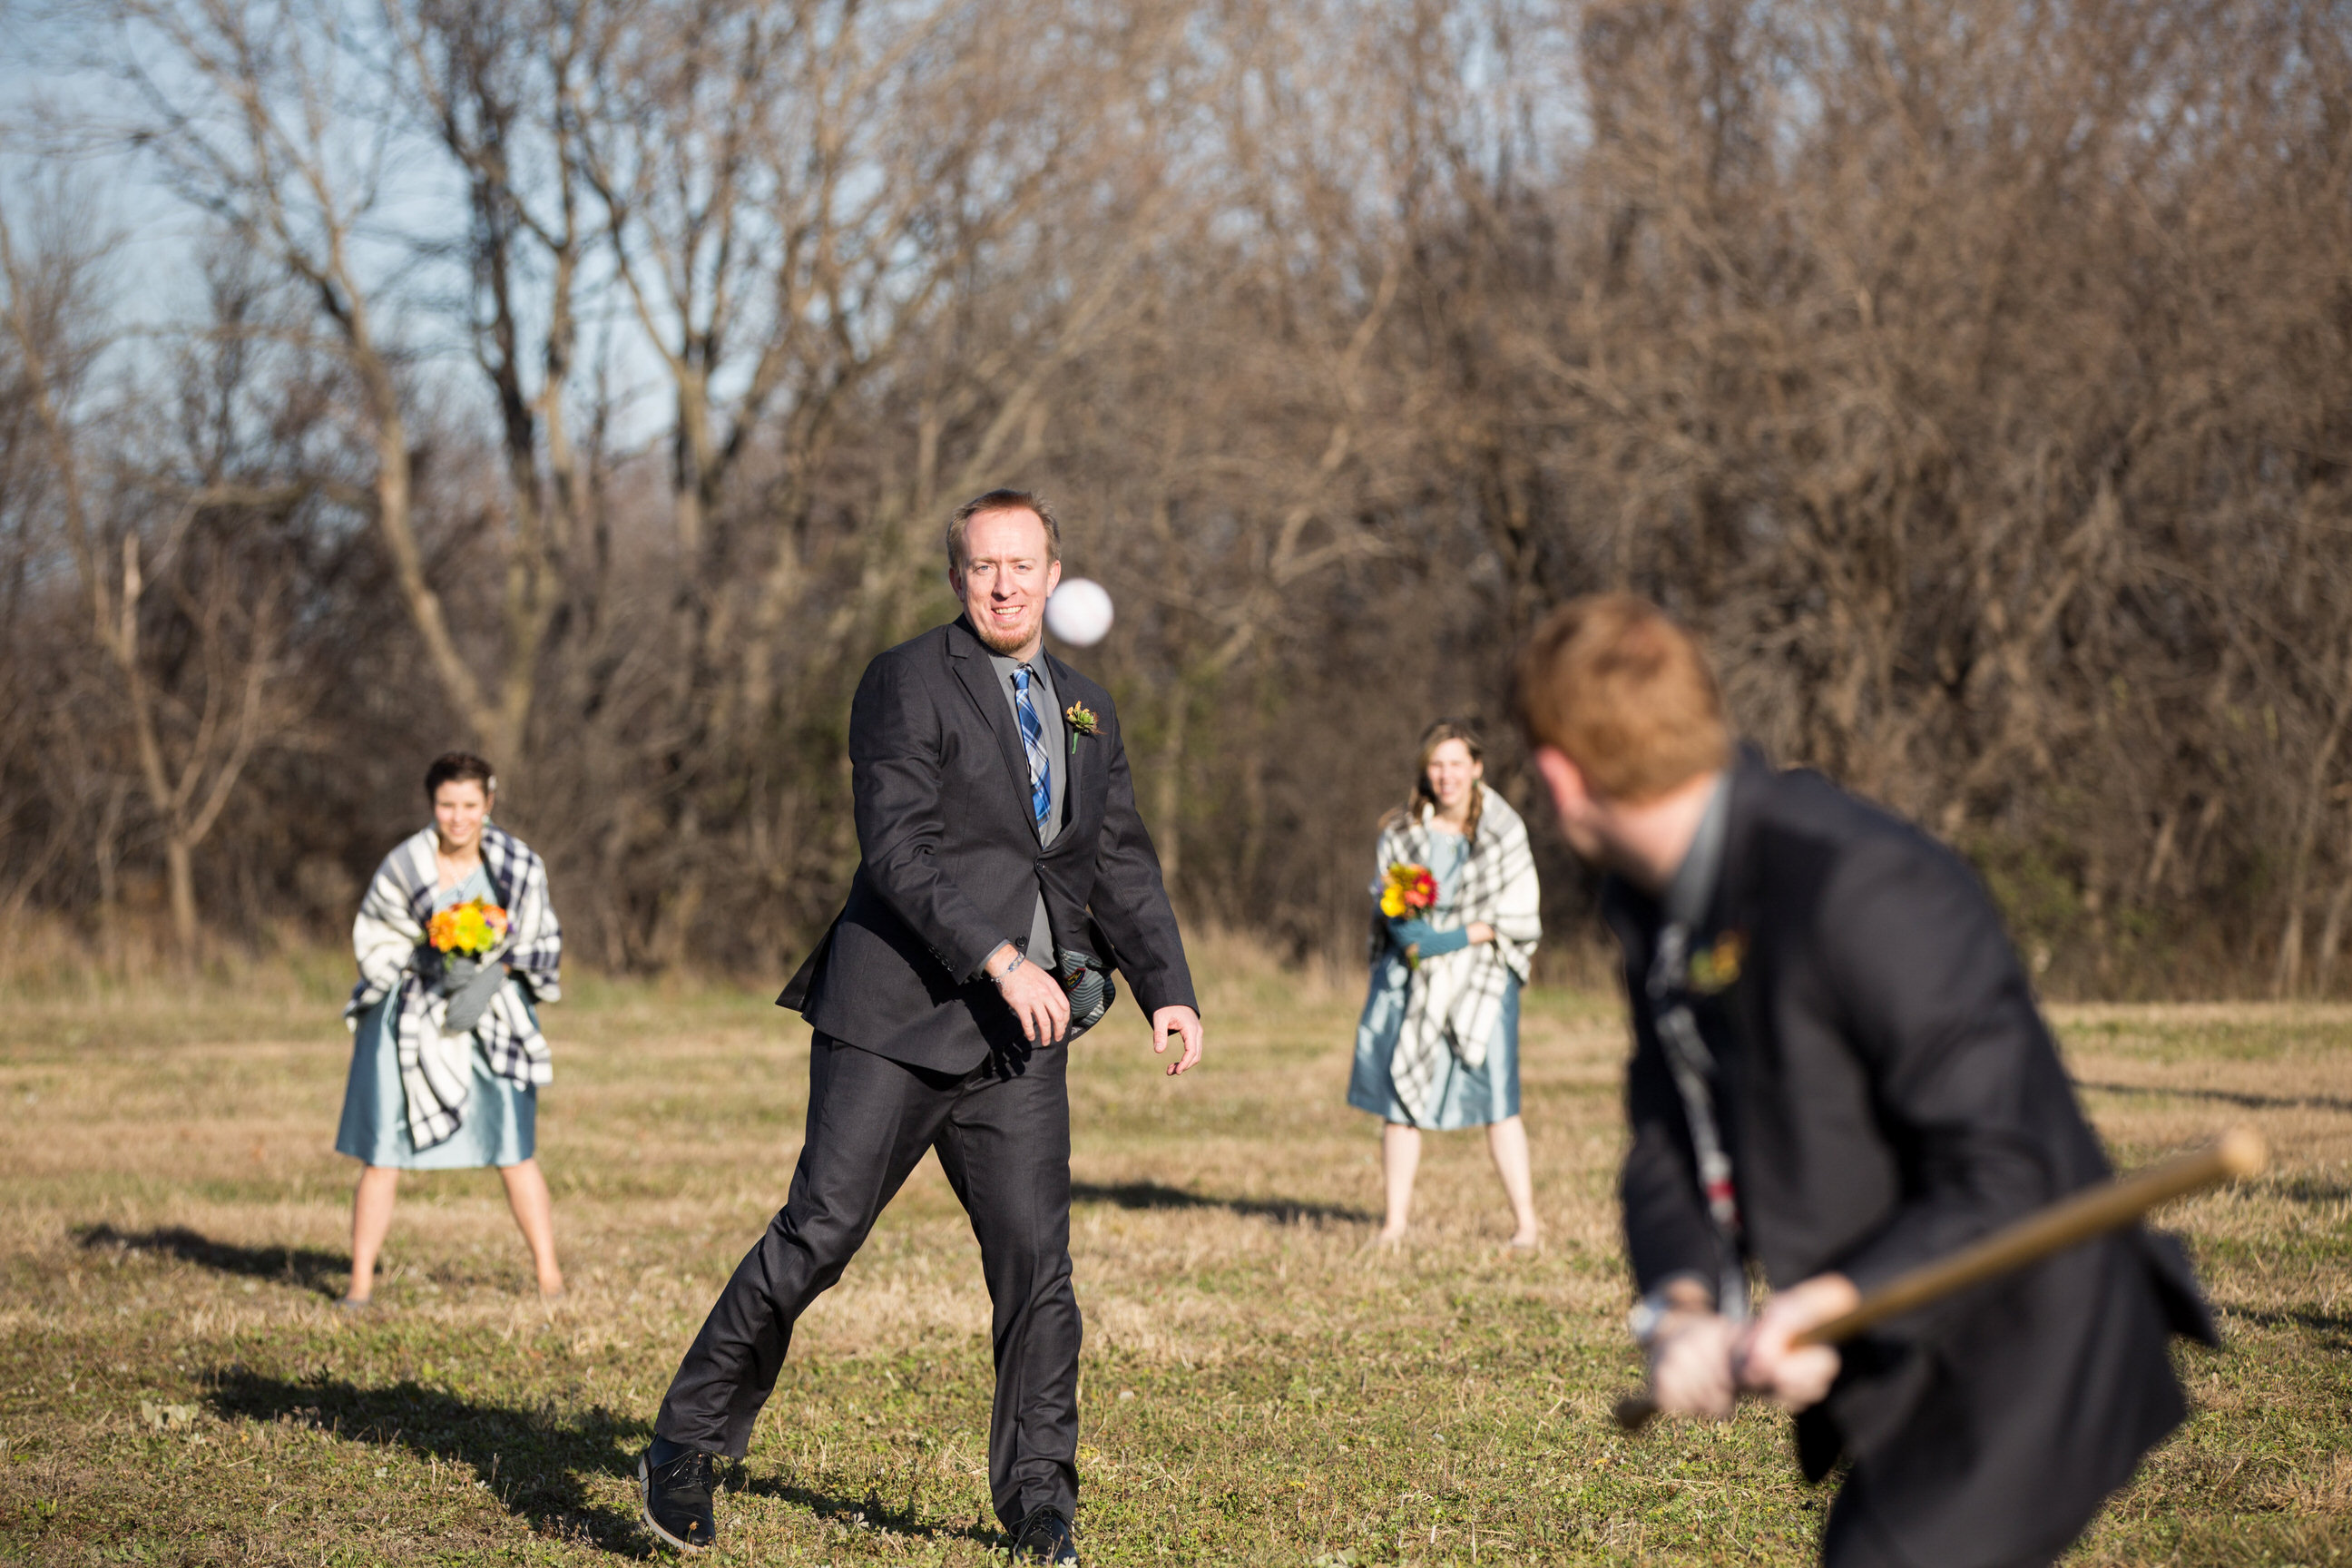 Wedding party playing baseball